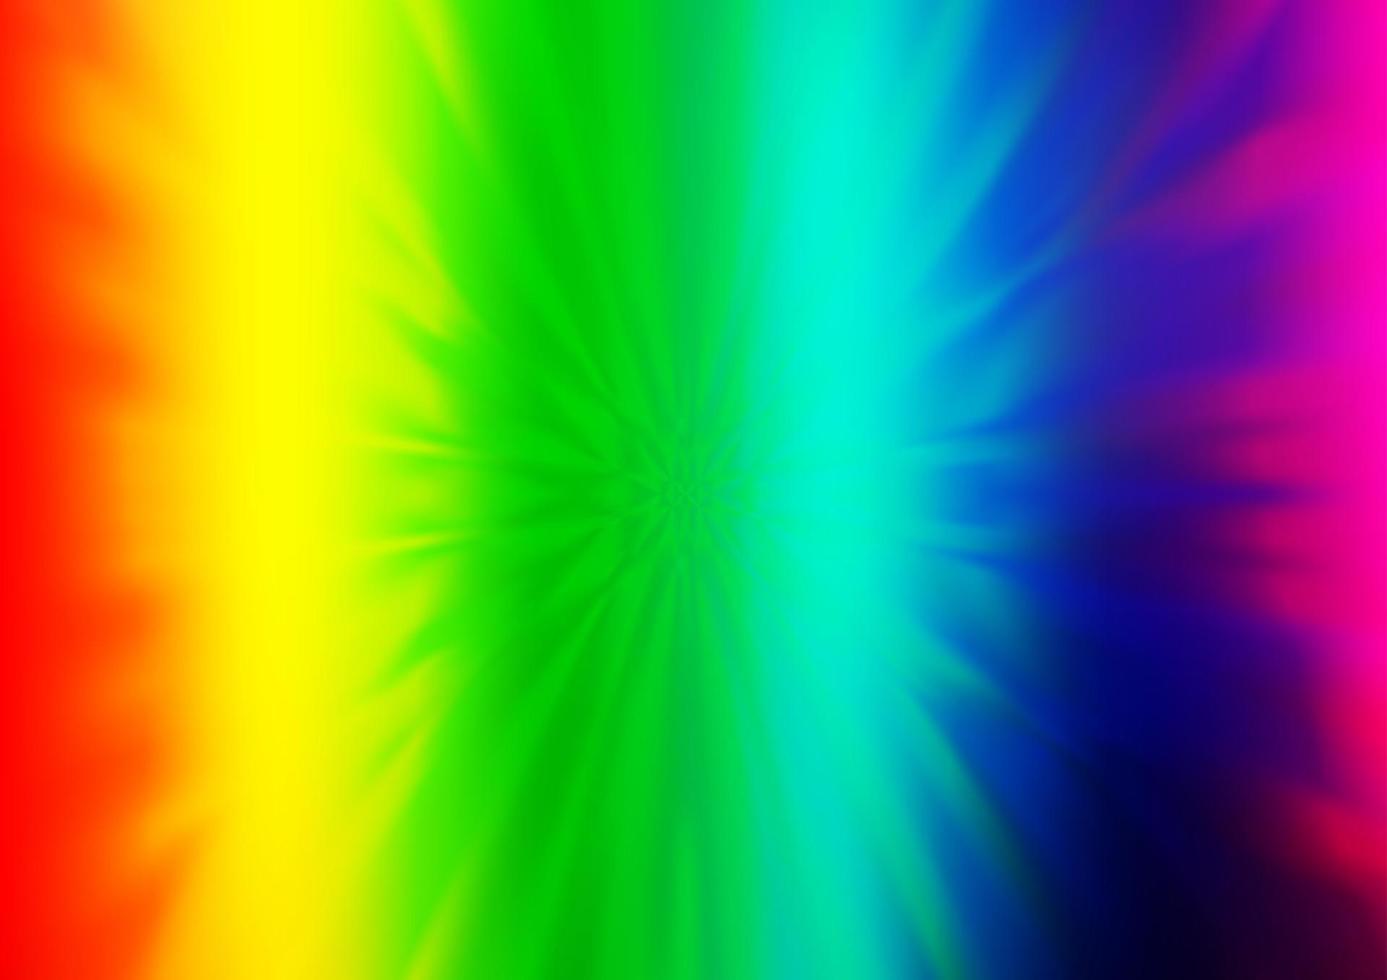 luz multicolor, bokeh de vetor de arco-íris e padrão colorido.